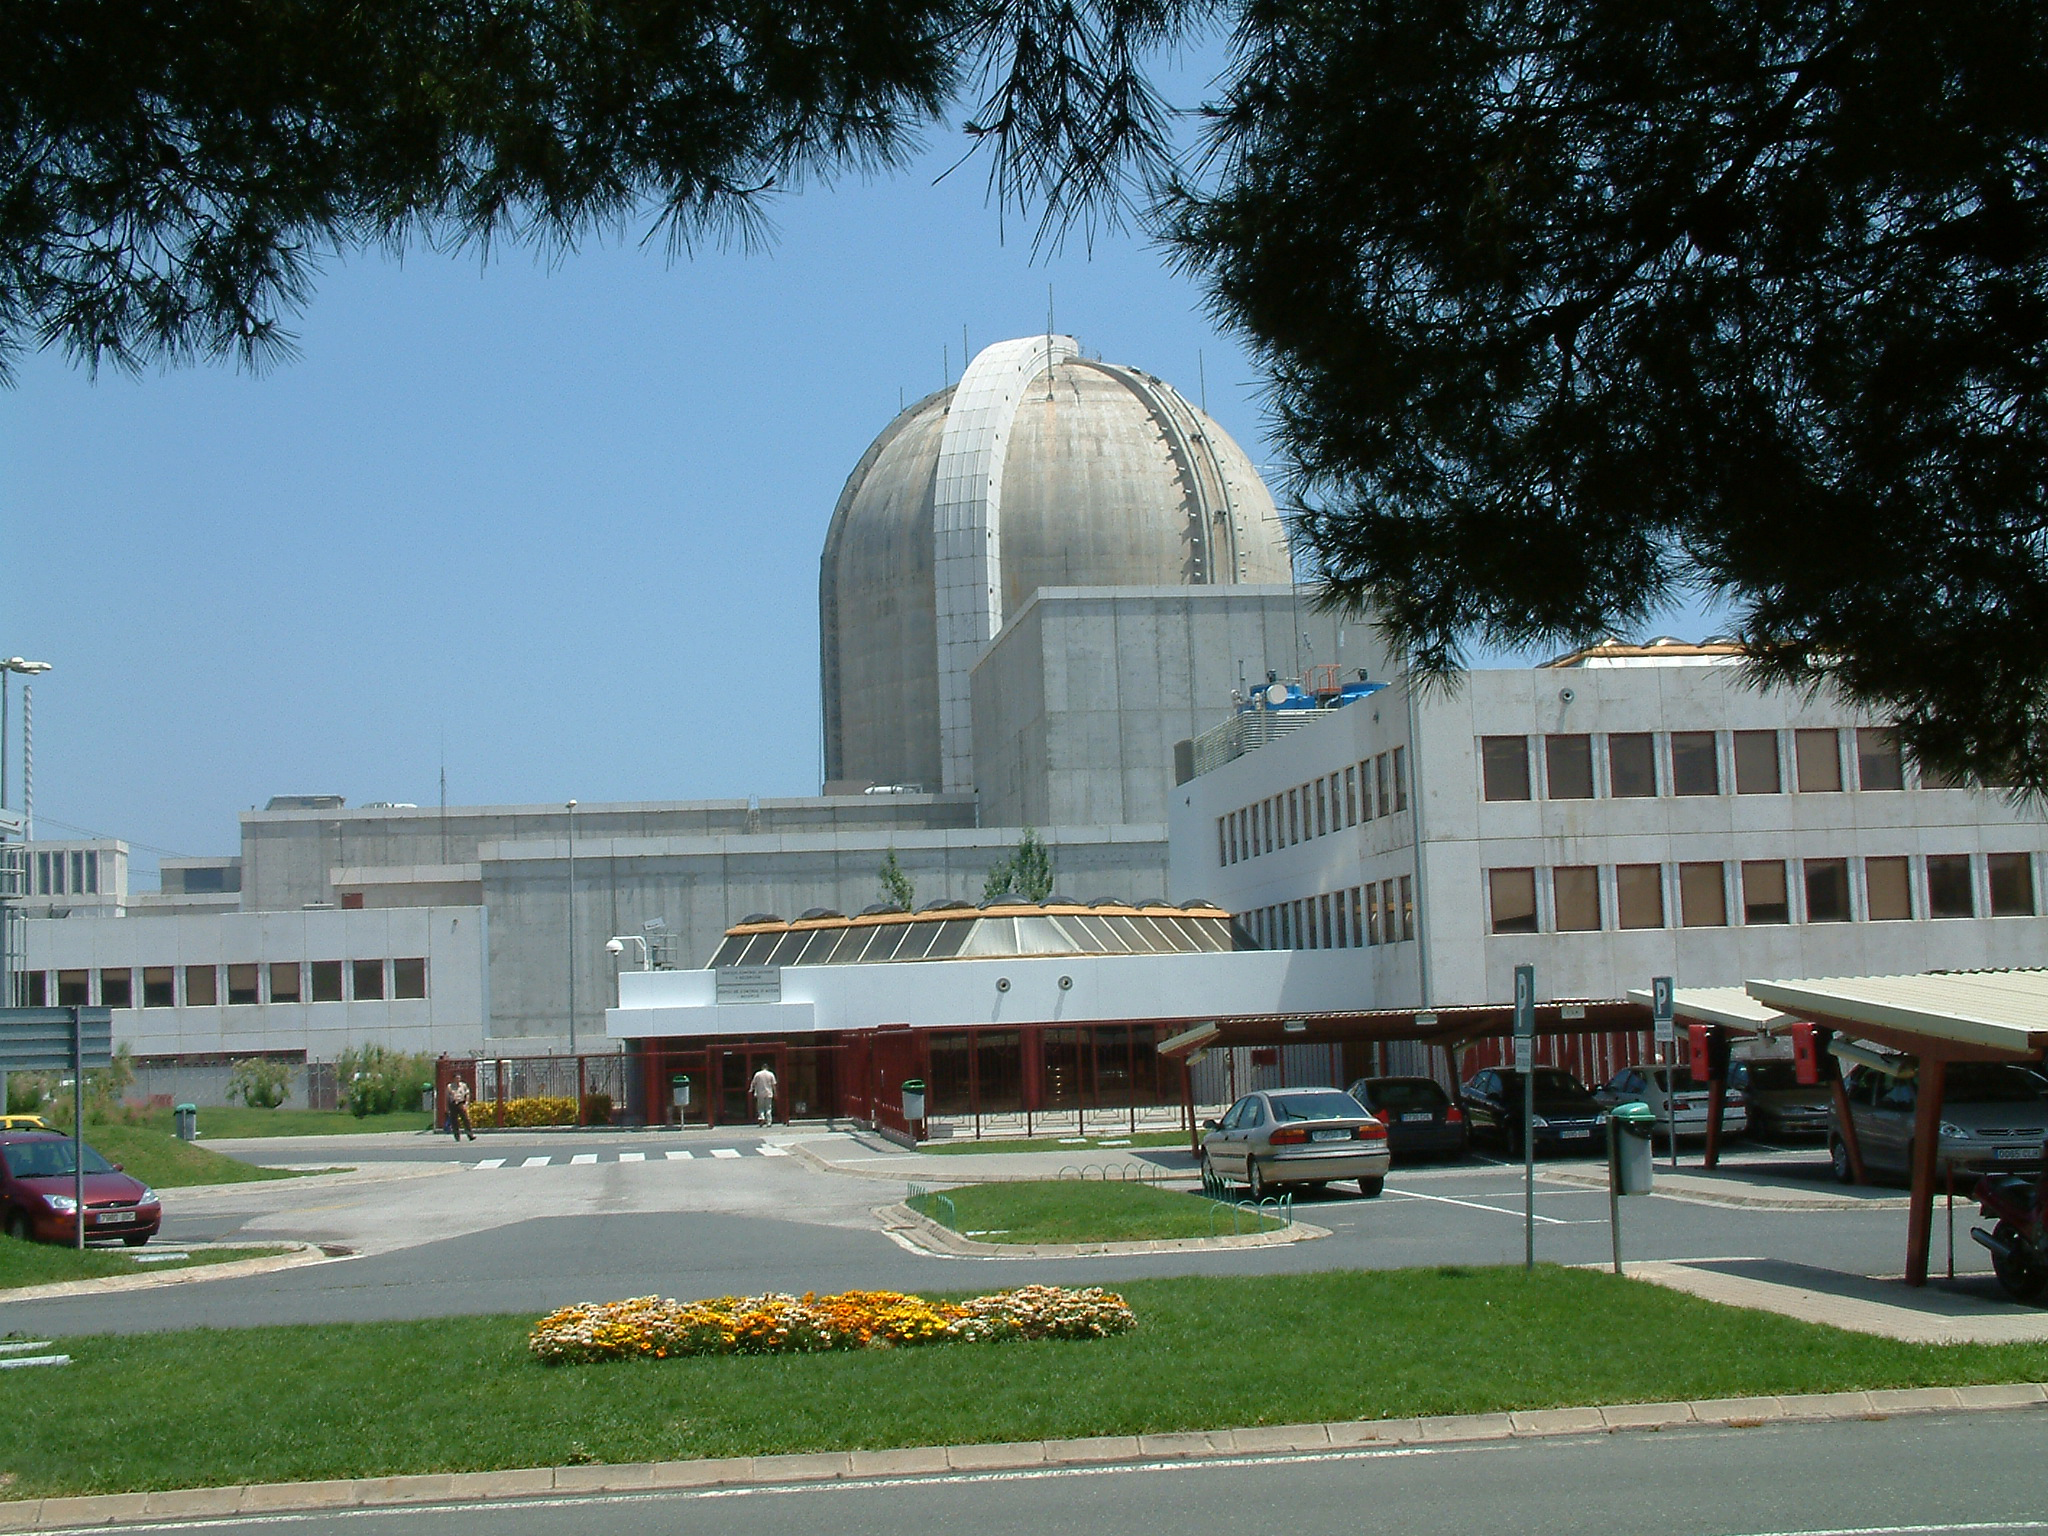 Central nuclear de Vandellòs II en Tarragona. FOTO: CSN